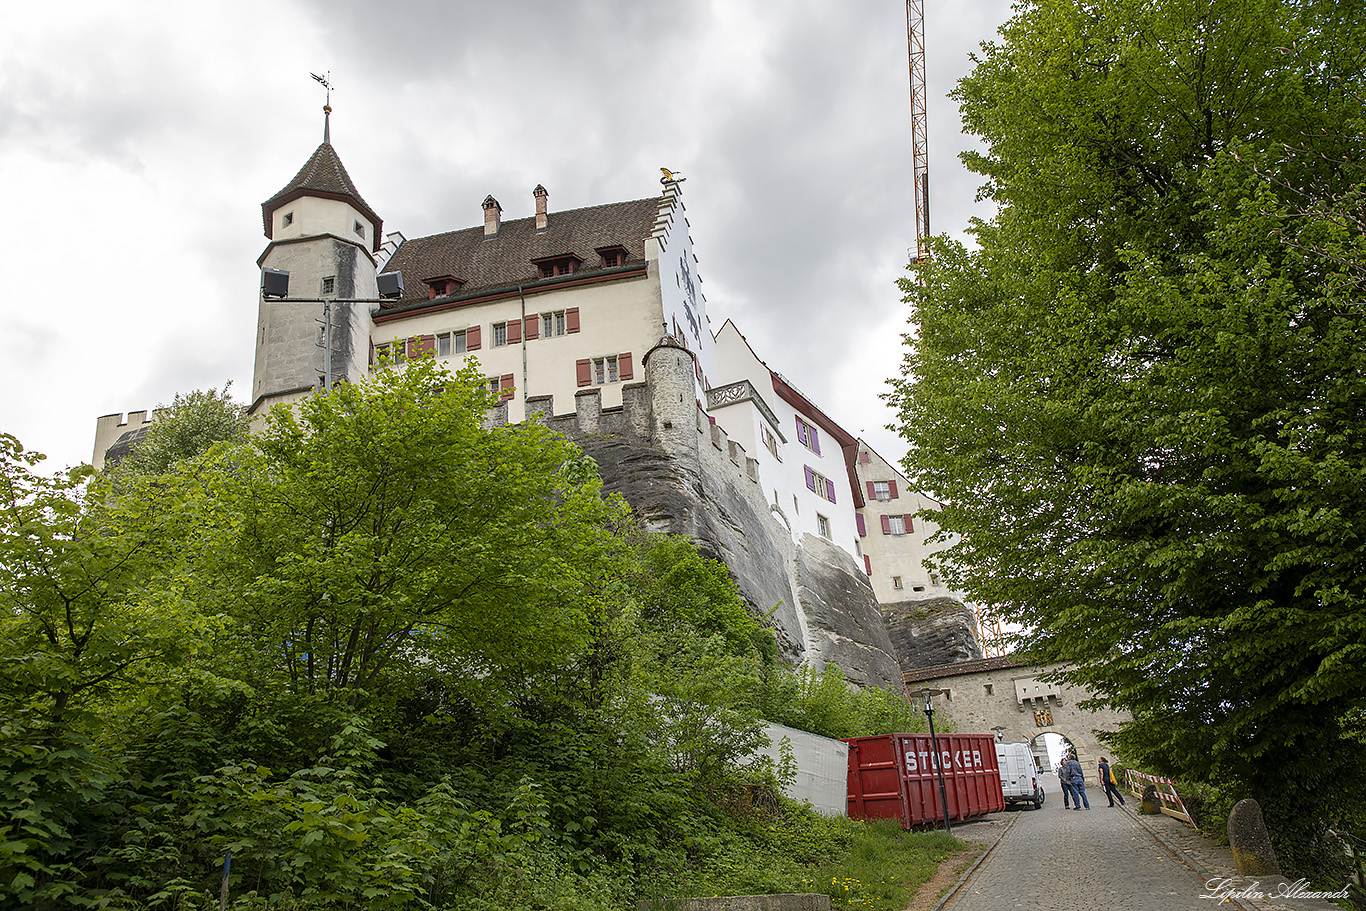 Замок Ленцбург Ленцбург (Lenzburg) - Швейцария (Switzerland)